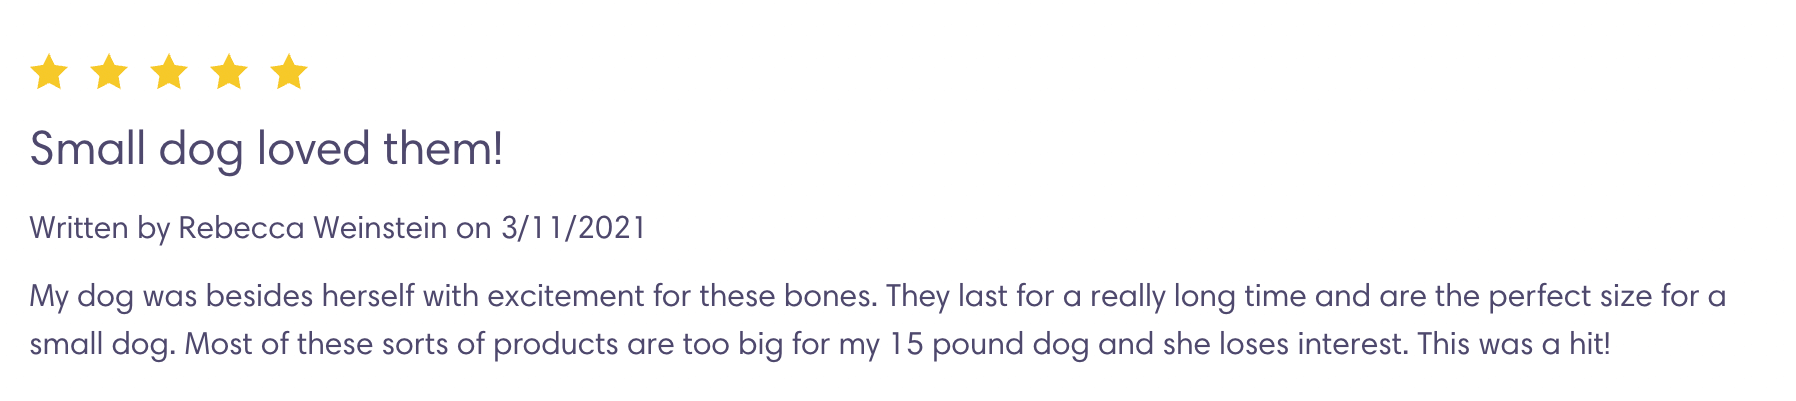 marrow bones for puppies - review 1